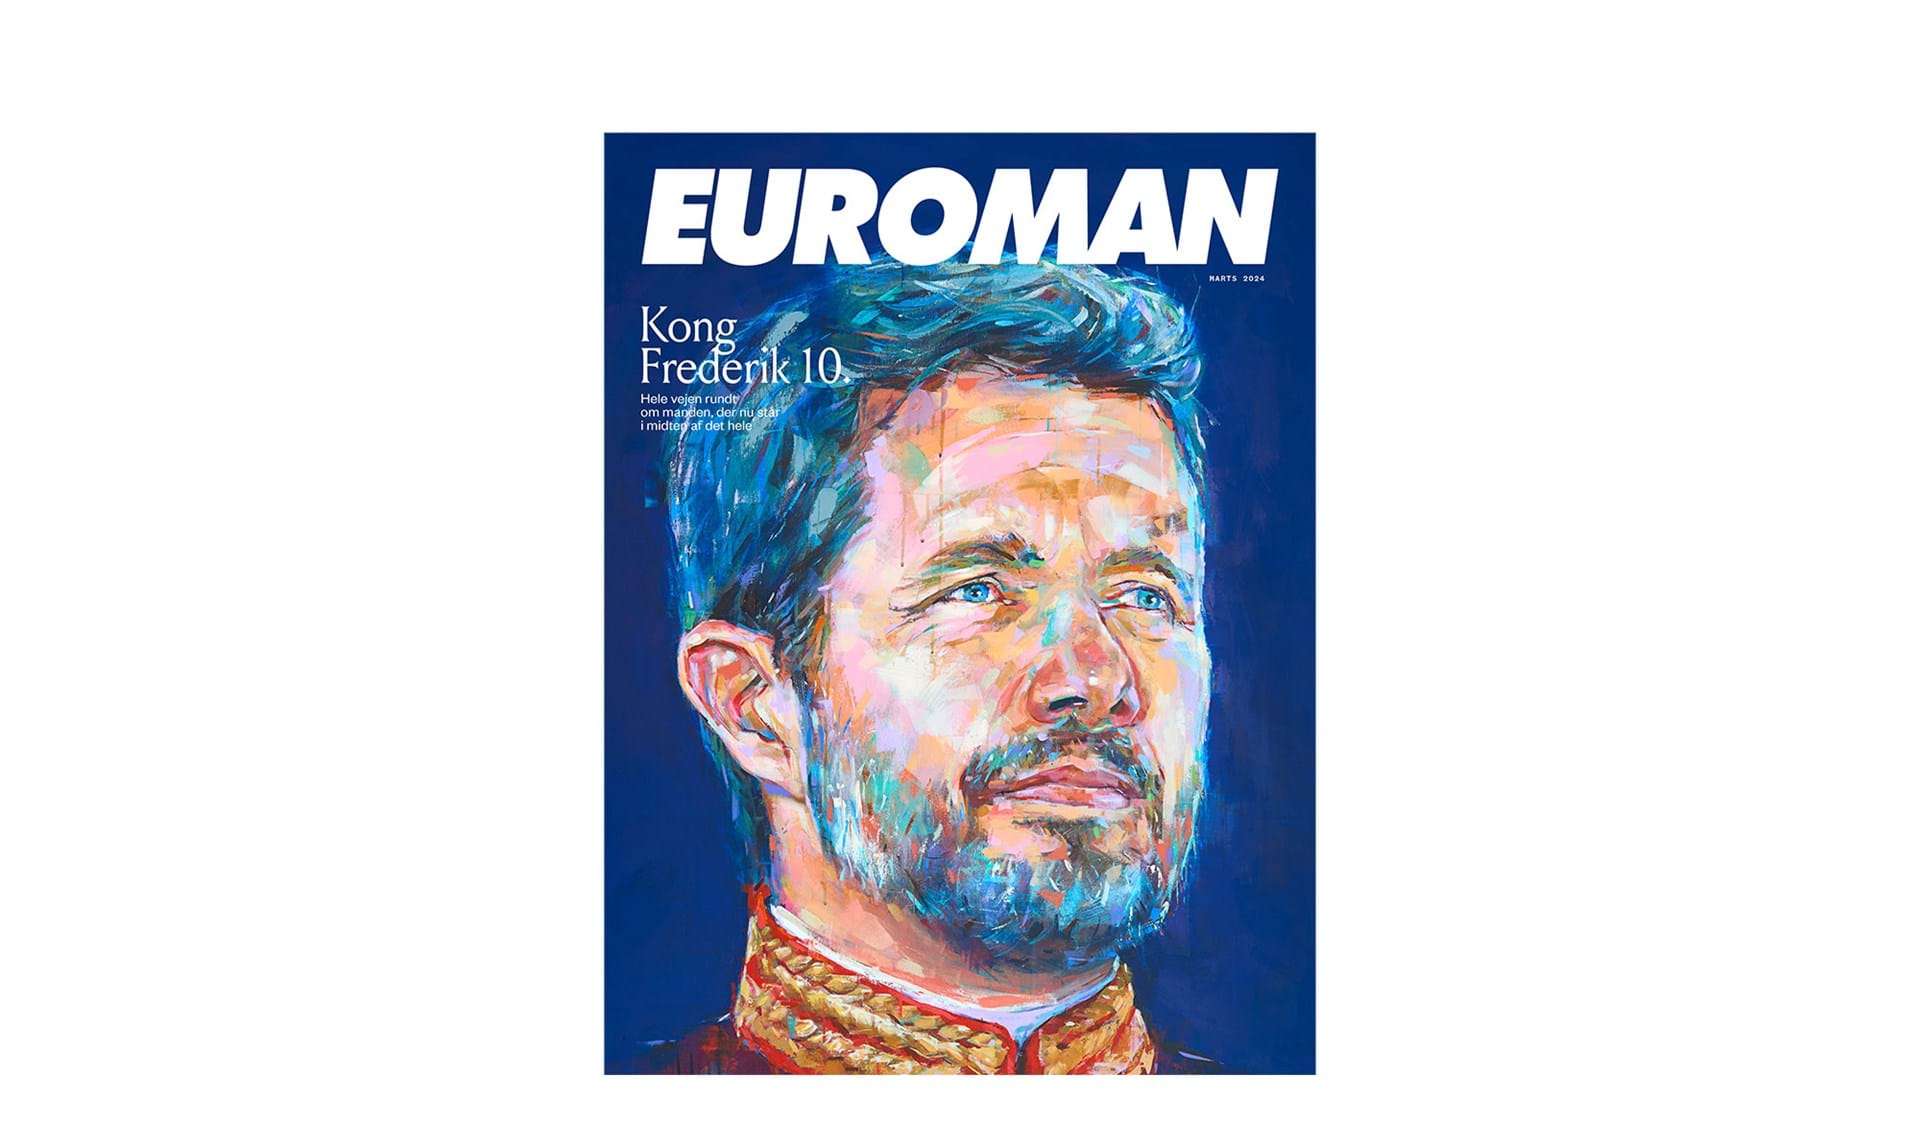 www.euroman.dk